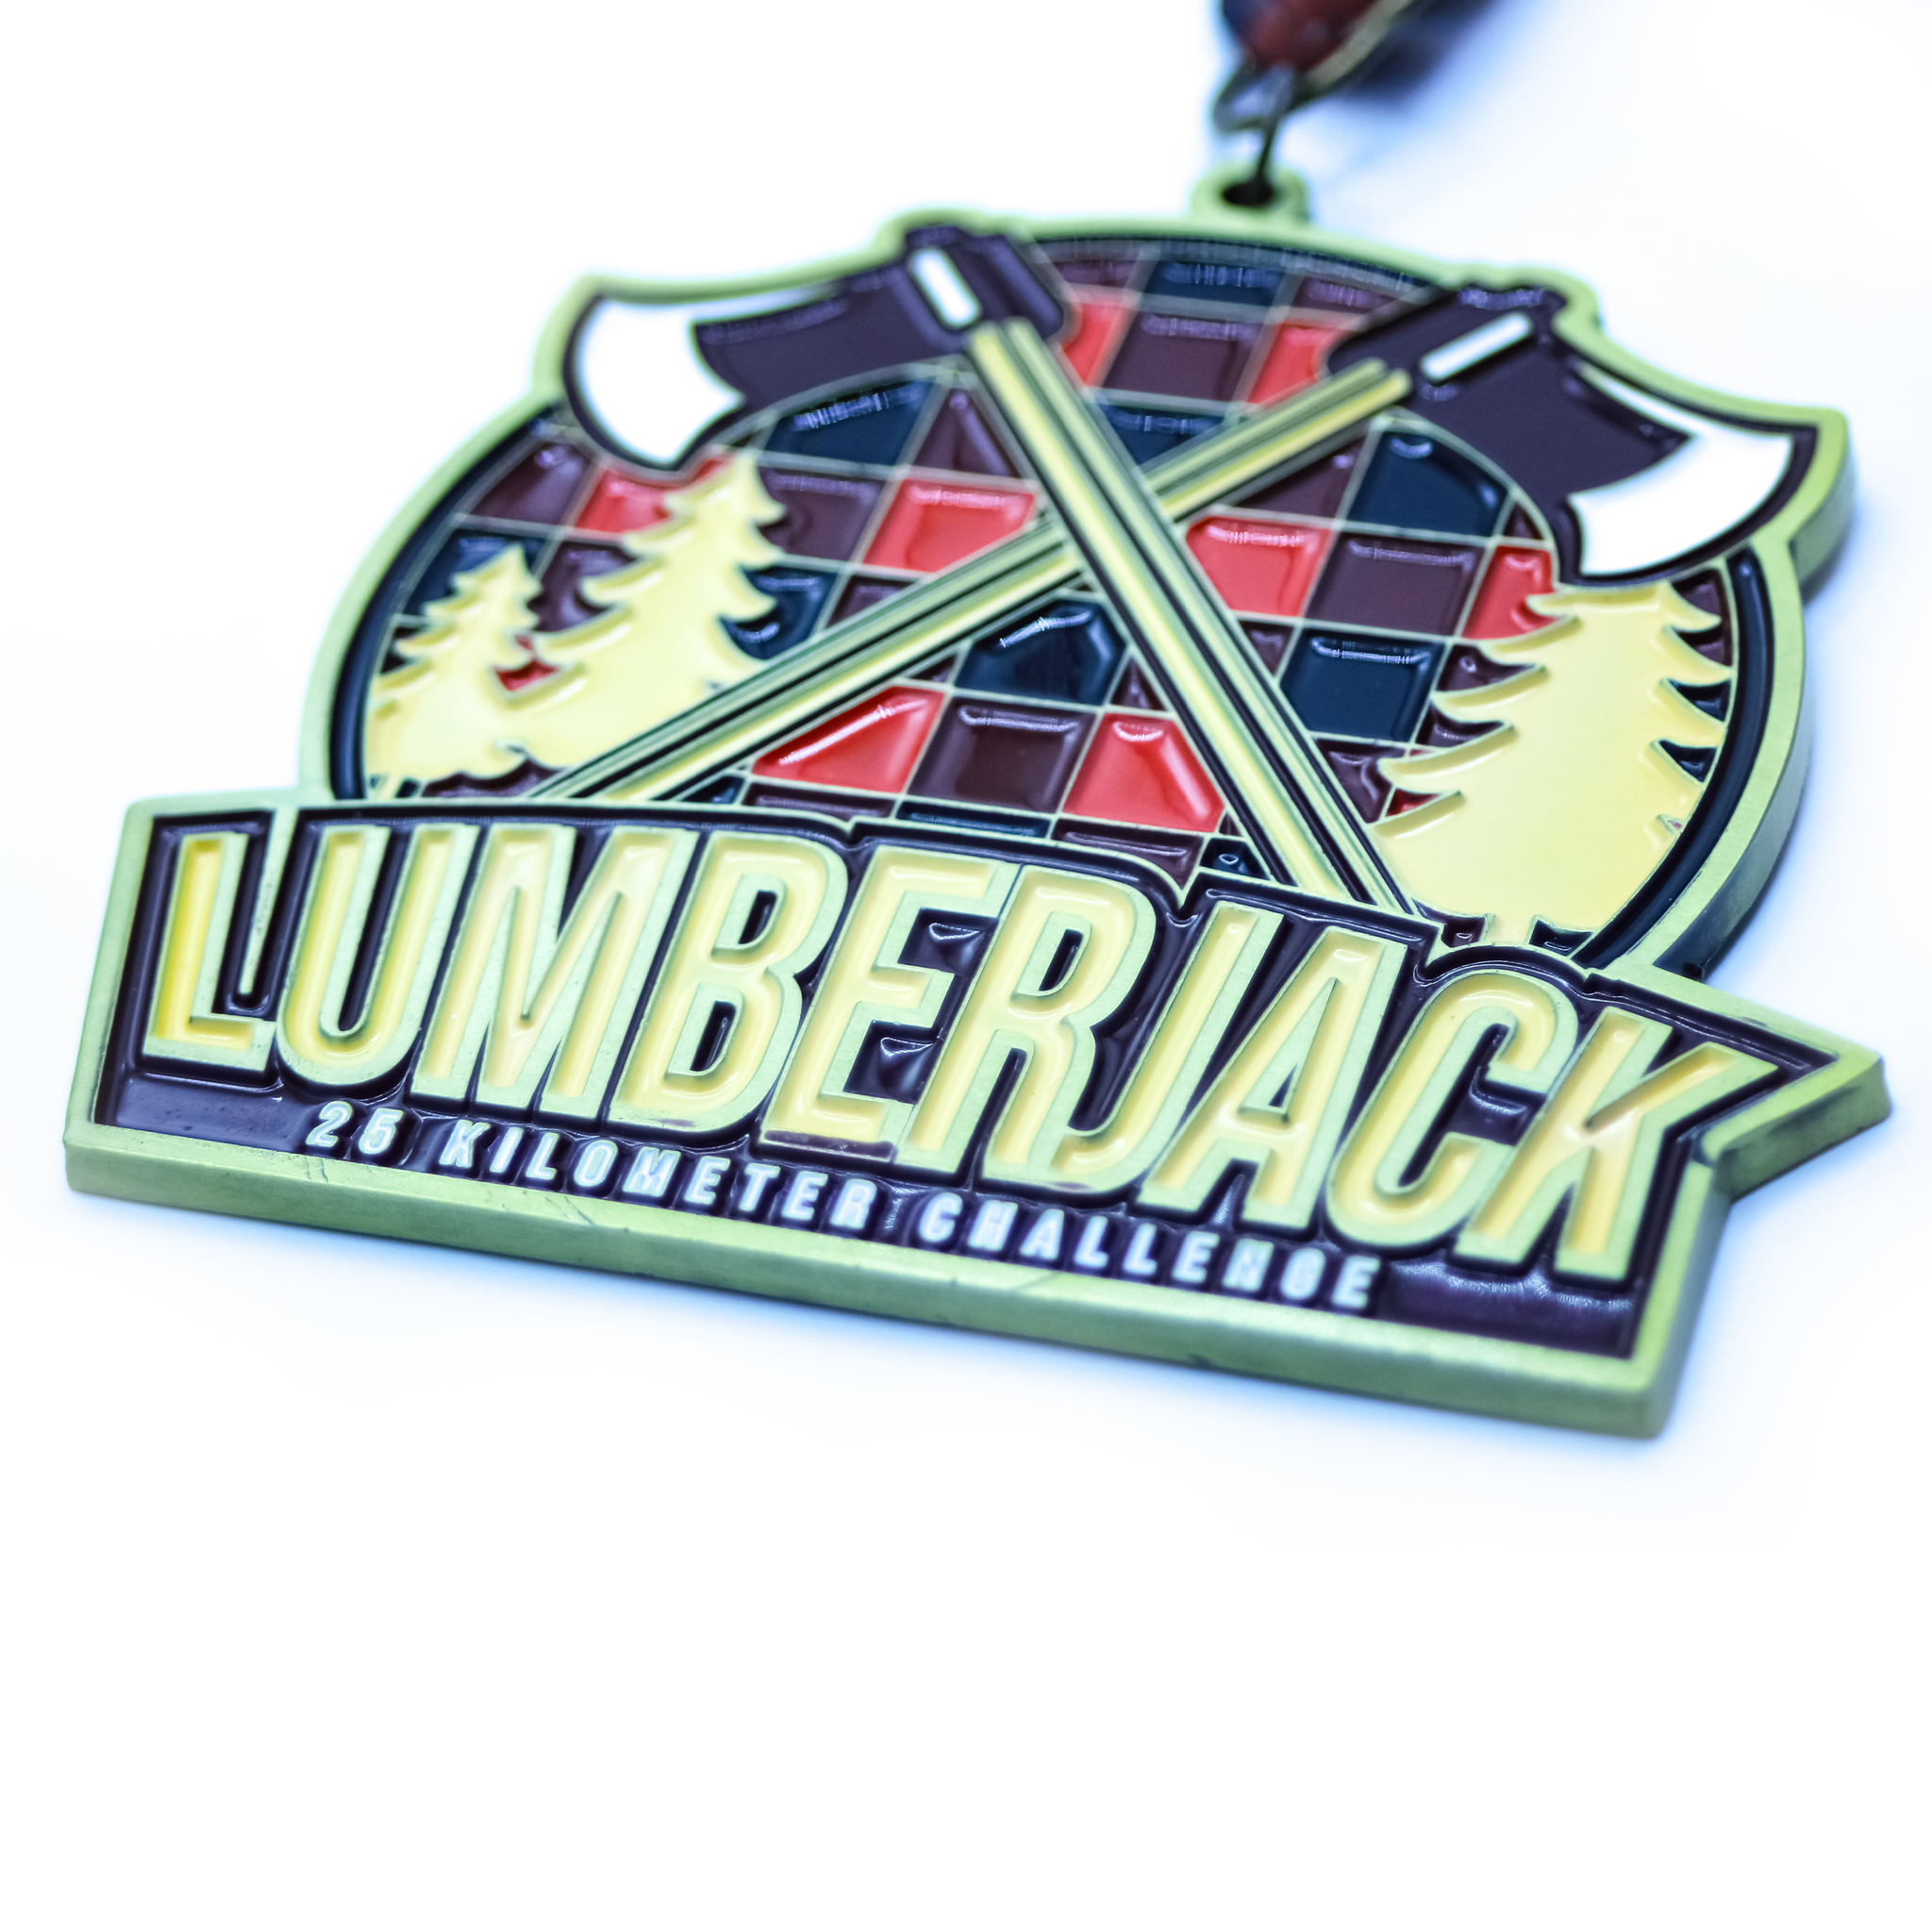 Lumberjack Challenge - Entry + Medal